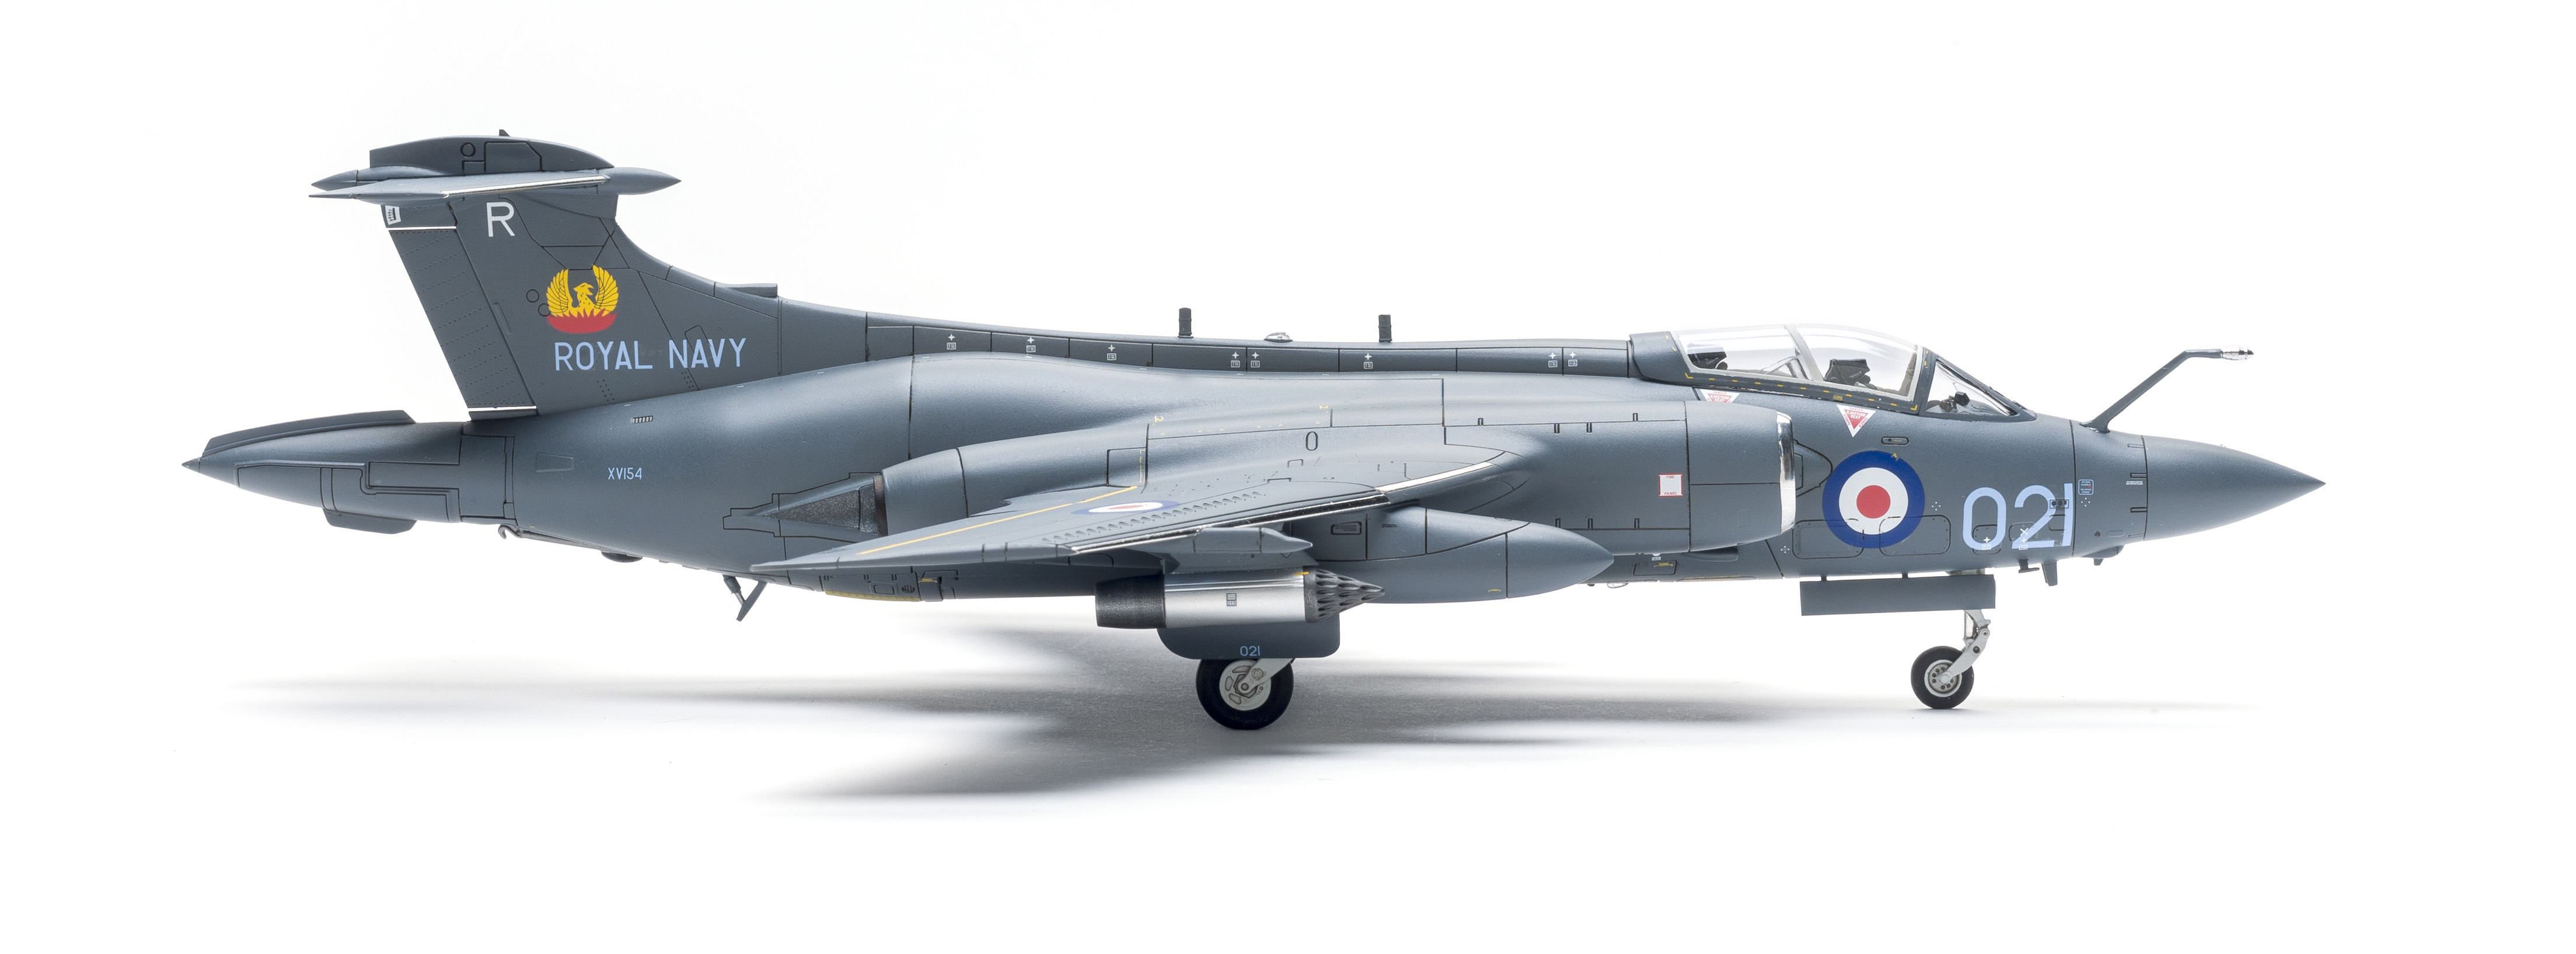 Airfix Blackburn Buccaneer S MK II RN 1:72 Military Aircraft Plastic Model Kit A06021 